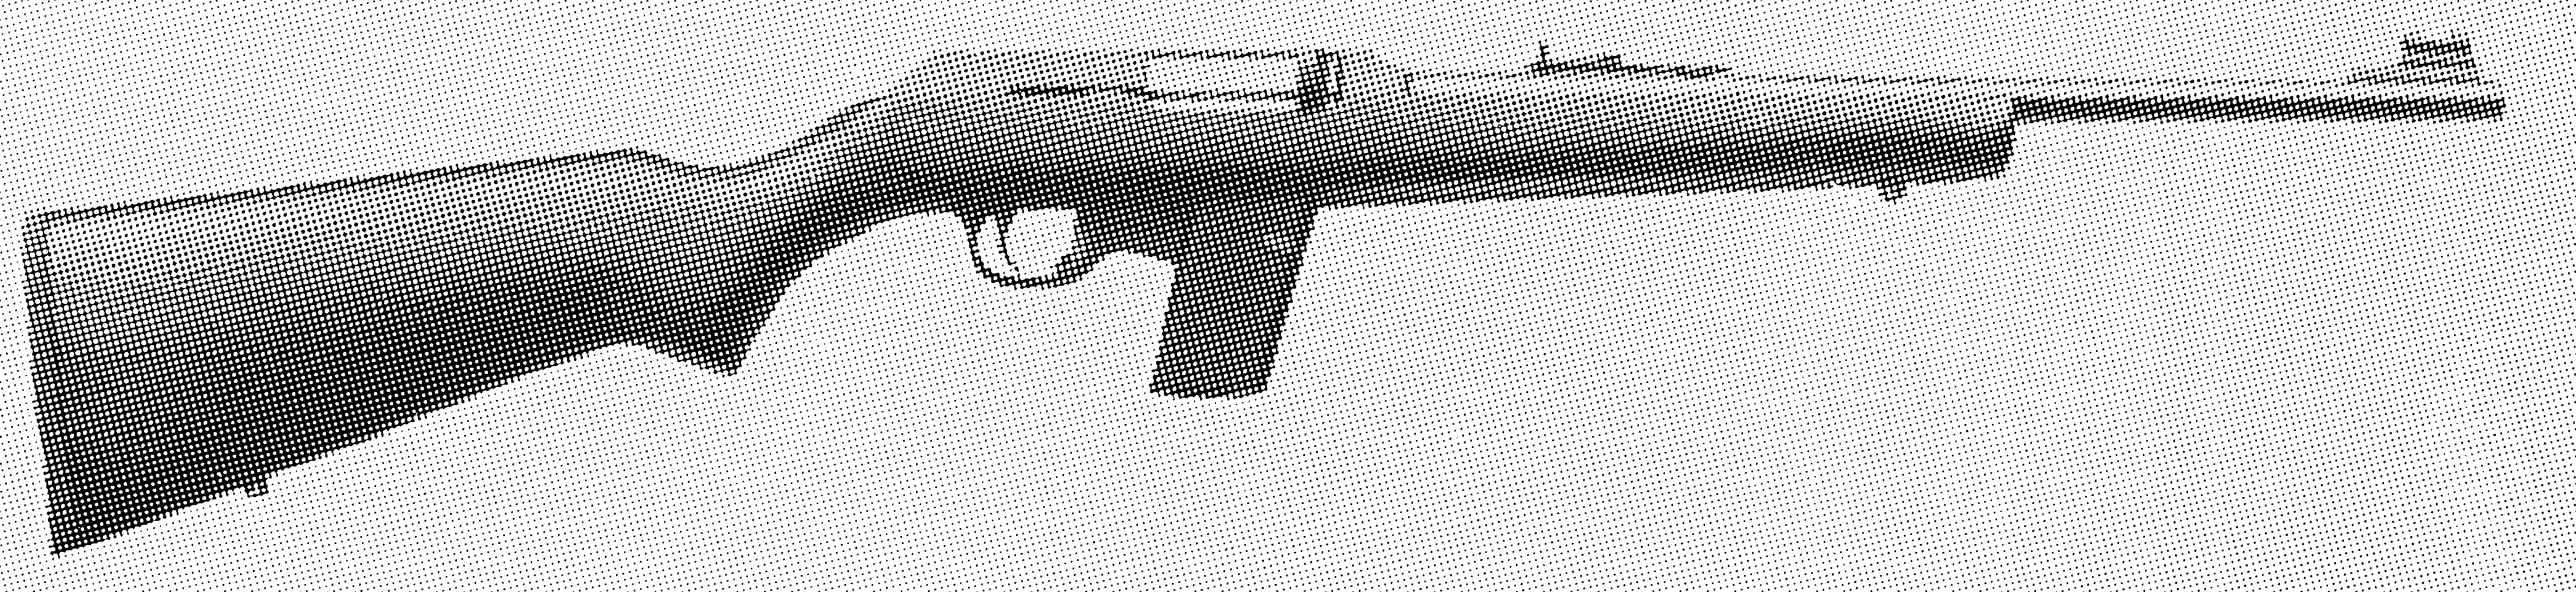 Model 9 Camp Carbine